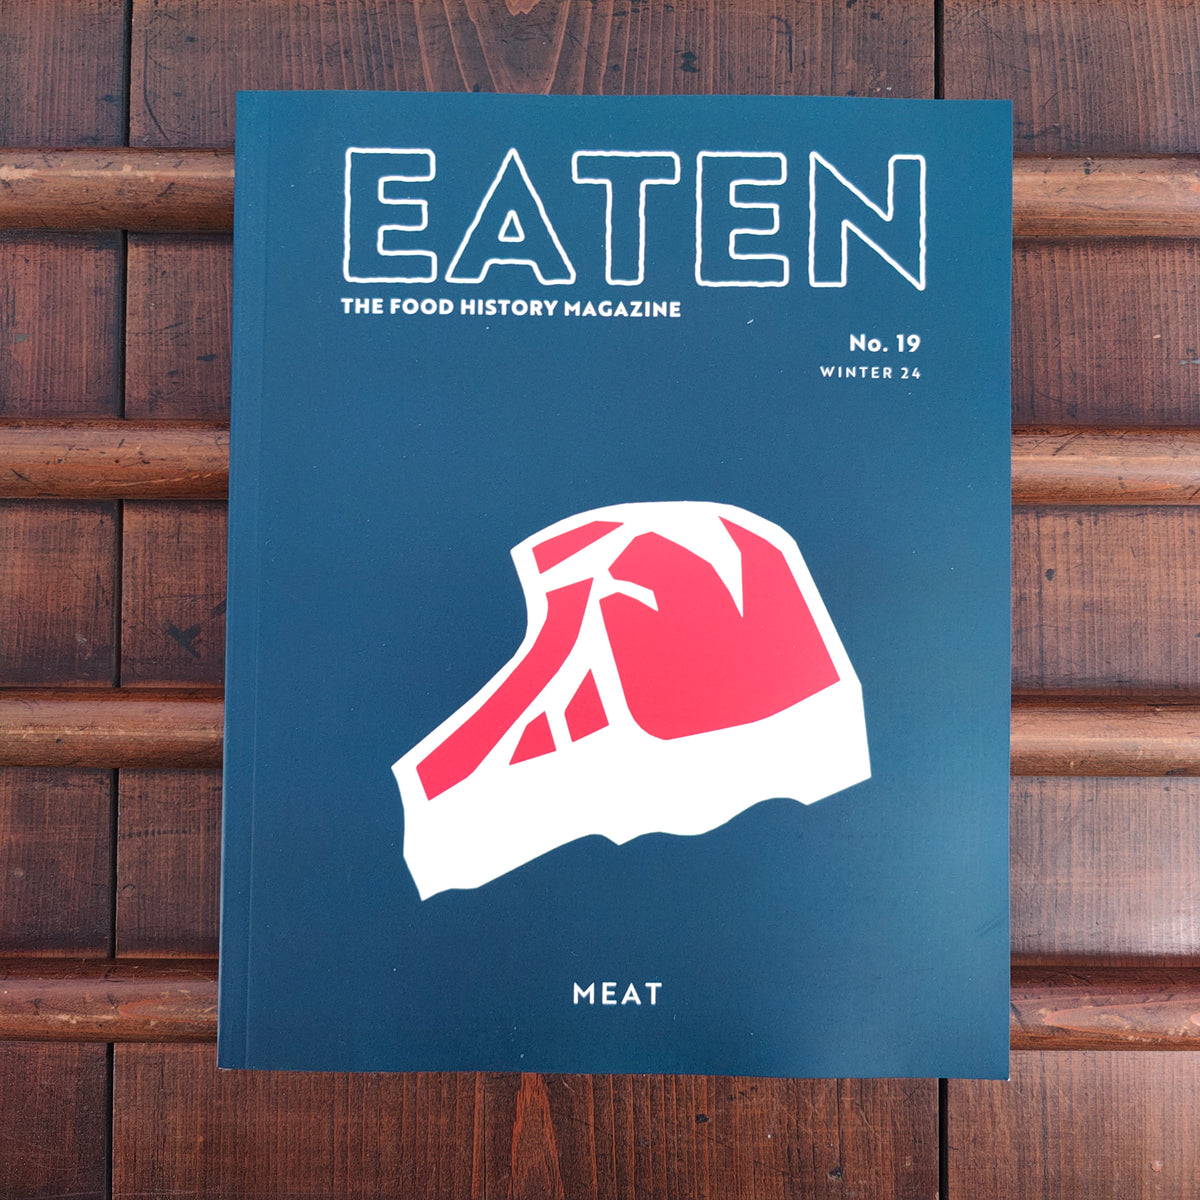 Eaten Magazine No. 19 - Meat